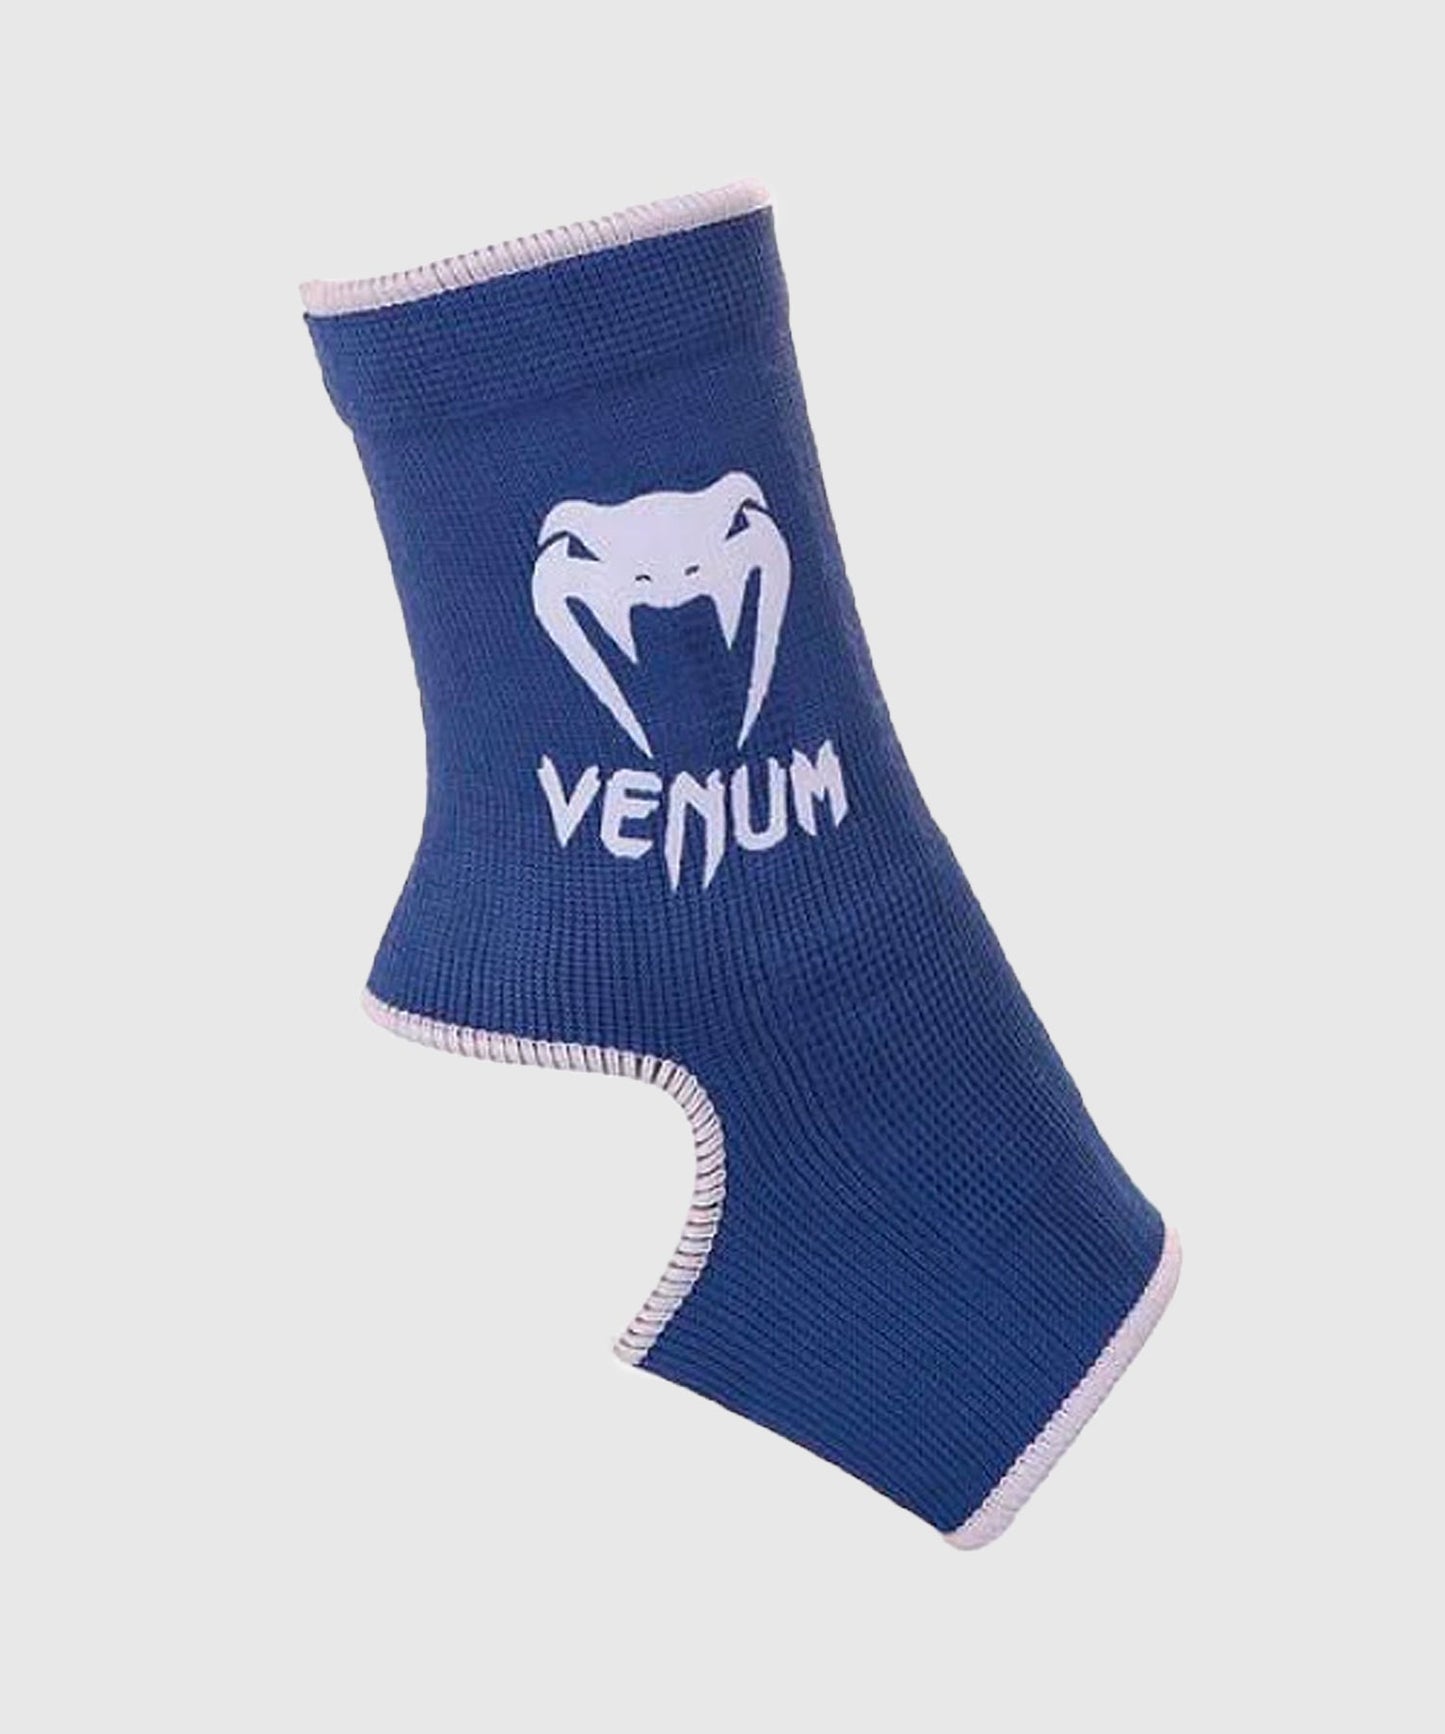 Venum Kontact Ankle Support Guards - Black/Blue